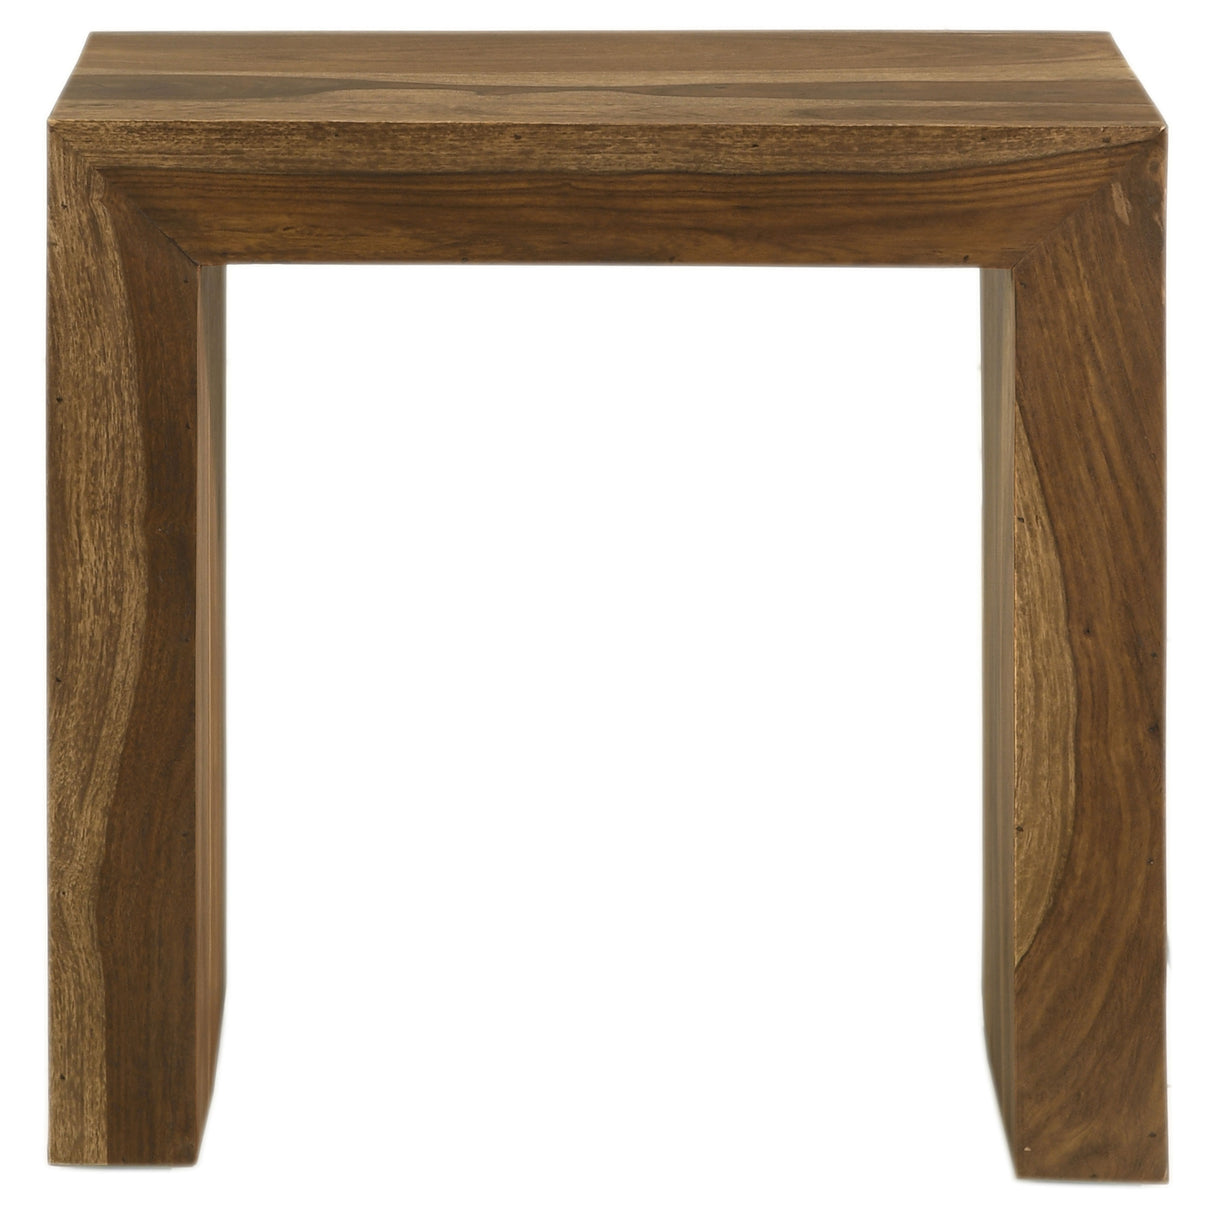 End Table - Odilia Rectangular Solid Wood End Table Auburn